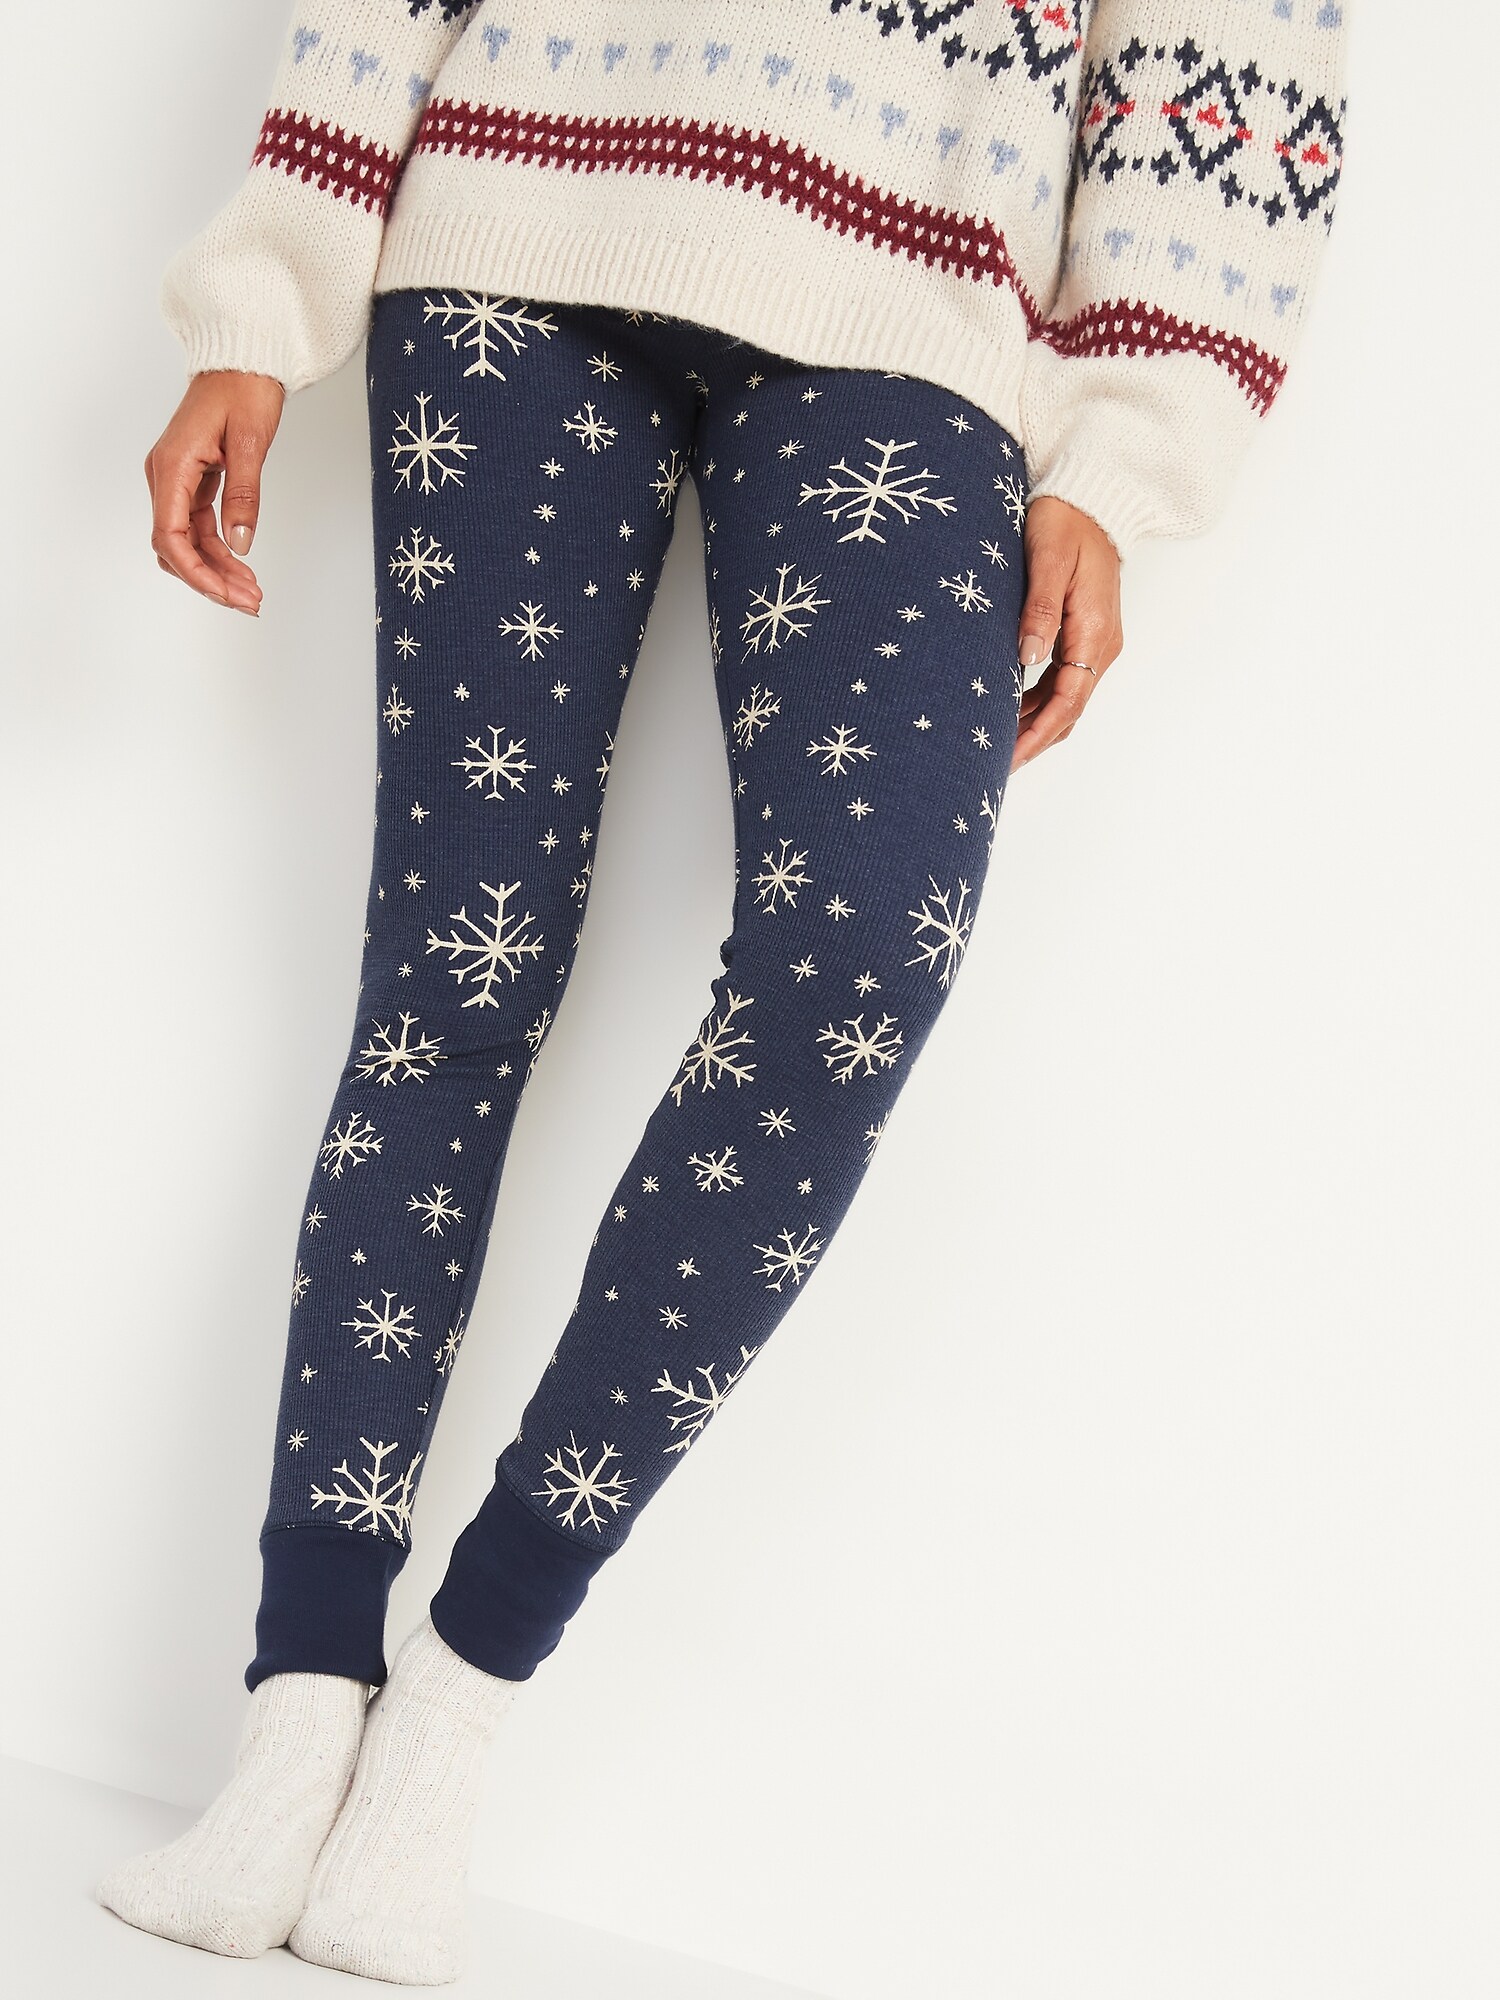 Matching Printed Thermal-Knit Pajama Leggings for Women, Old Navy